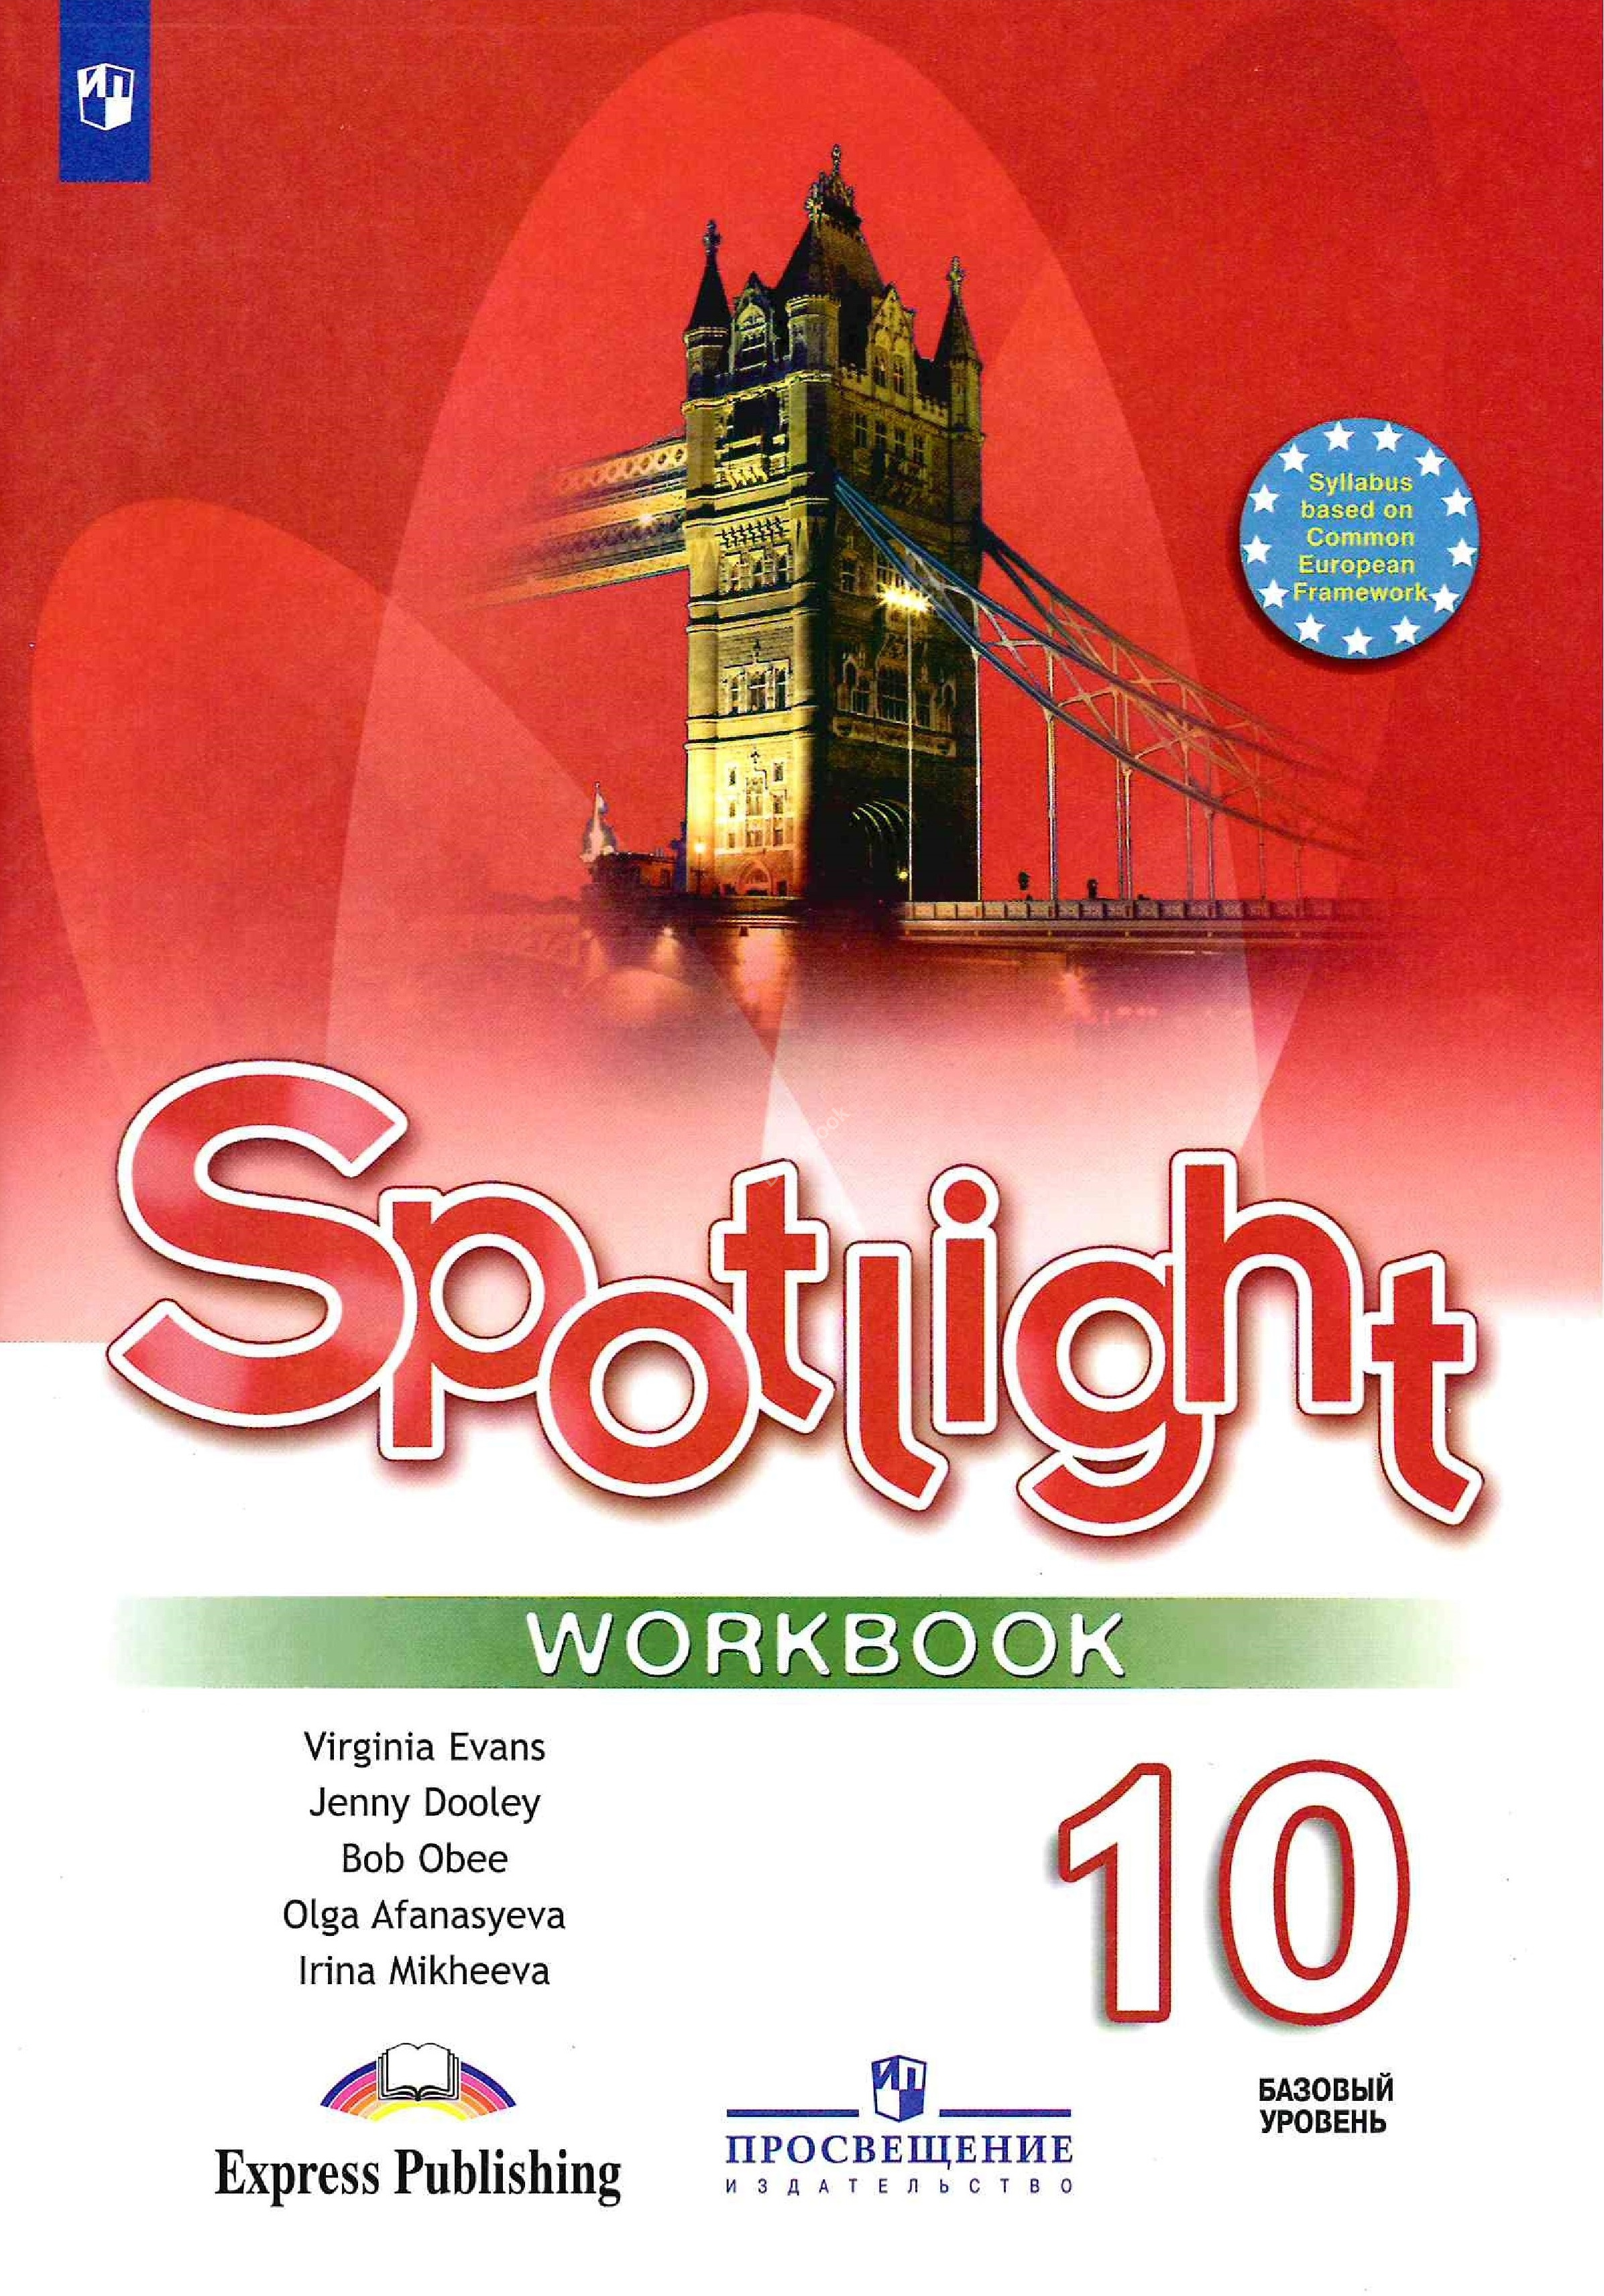 Spotlight 6 7. Workbook Spotlight 5 класс ваулина. Spotlight 5 Workbook английский язык Эванс. Англ 5 класс рабочая тетрадь Spotlight. Тетради для английского языка 5 класс спотлайт.